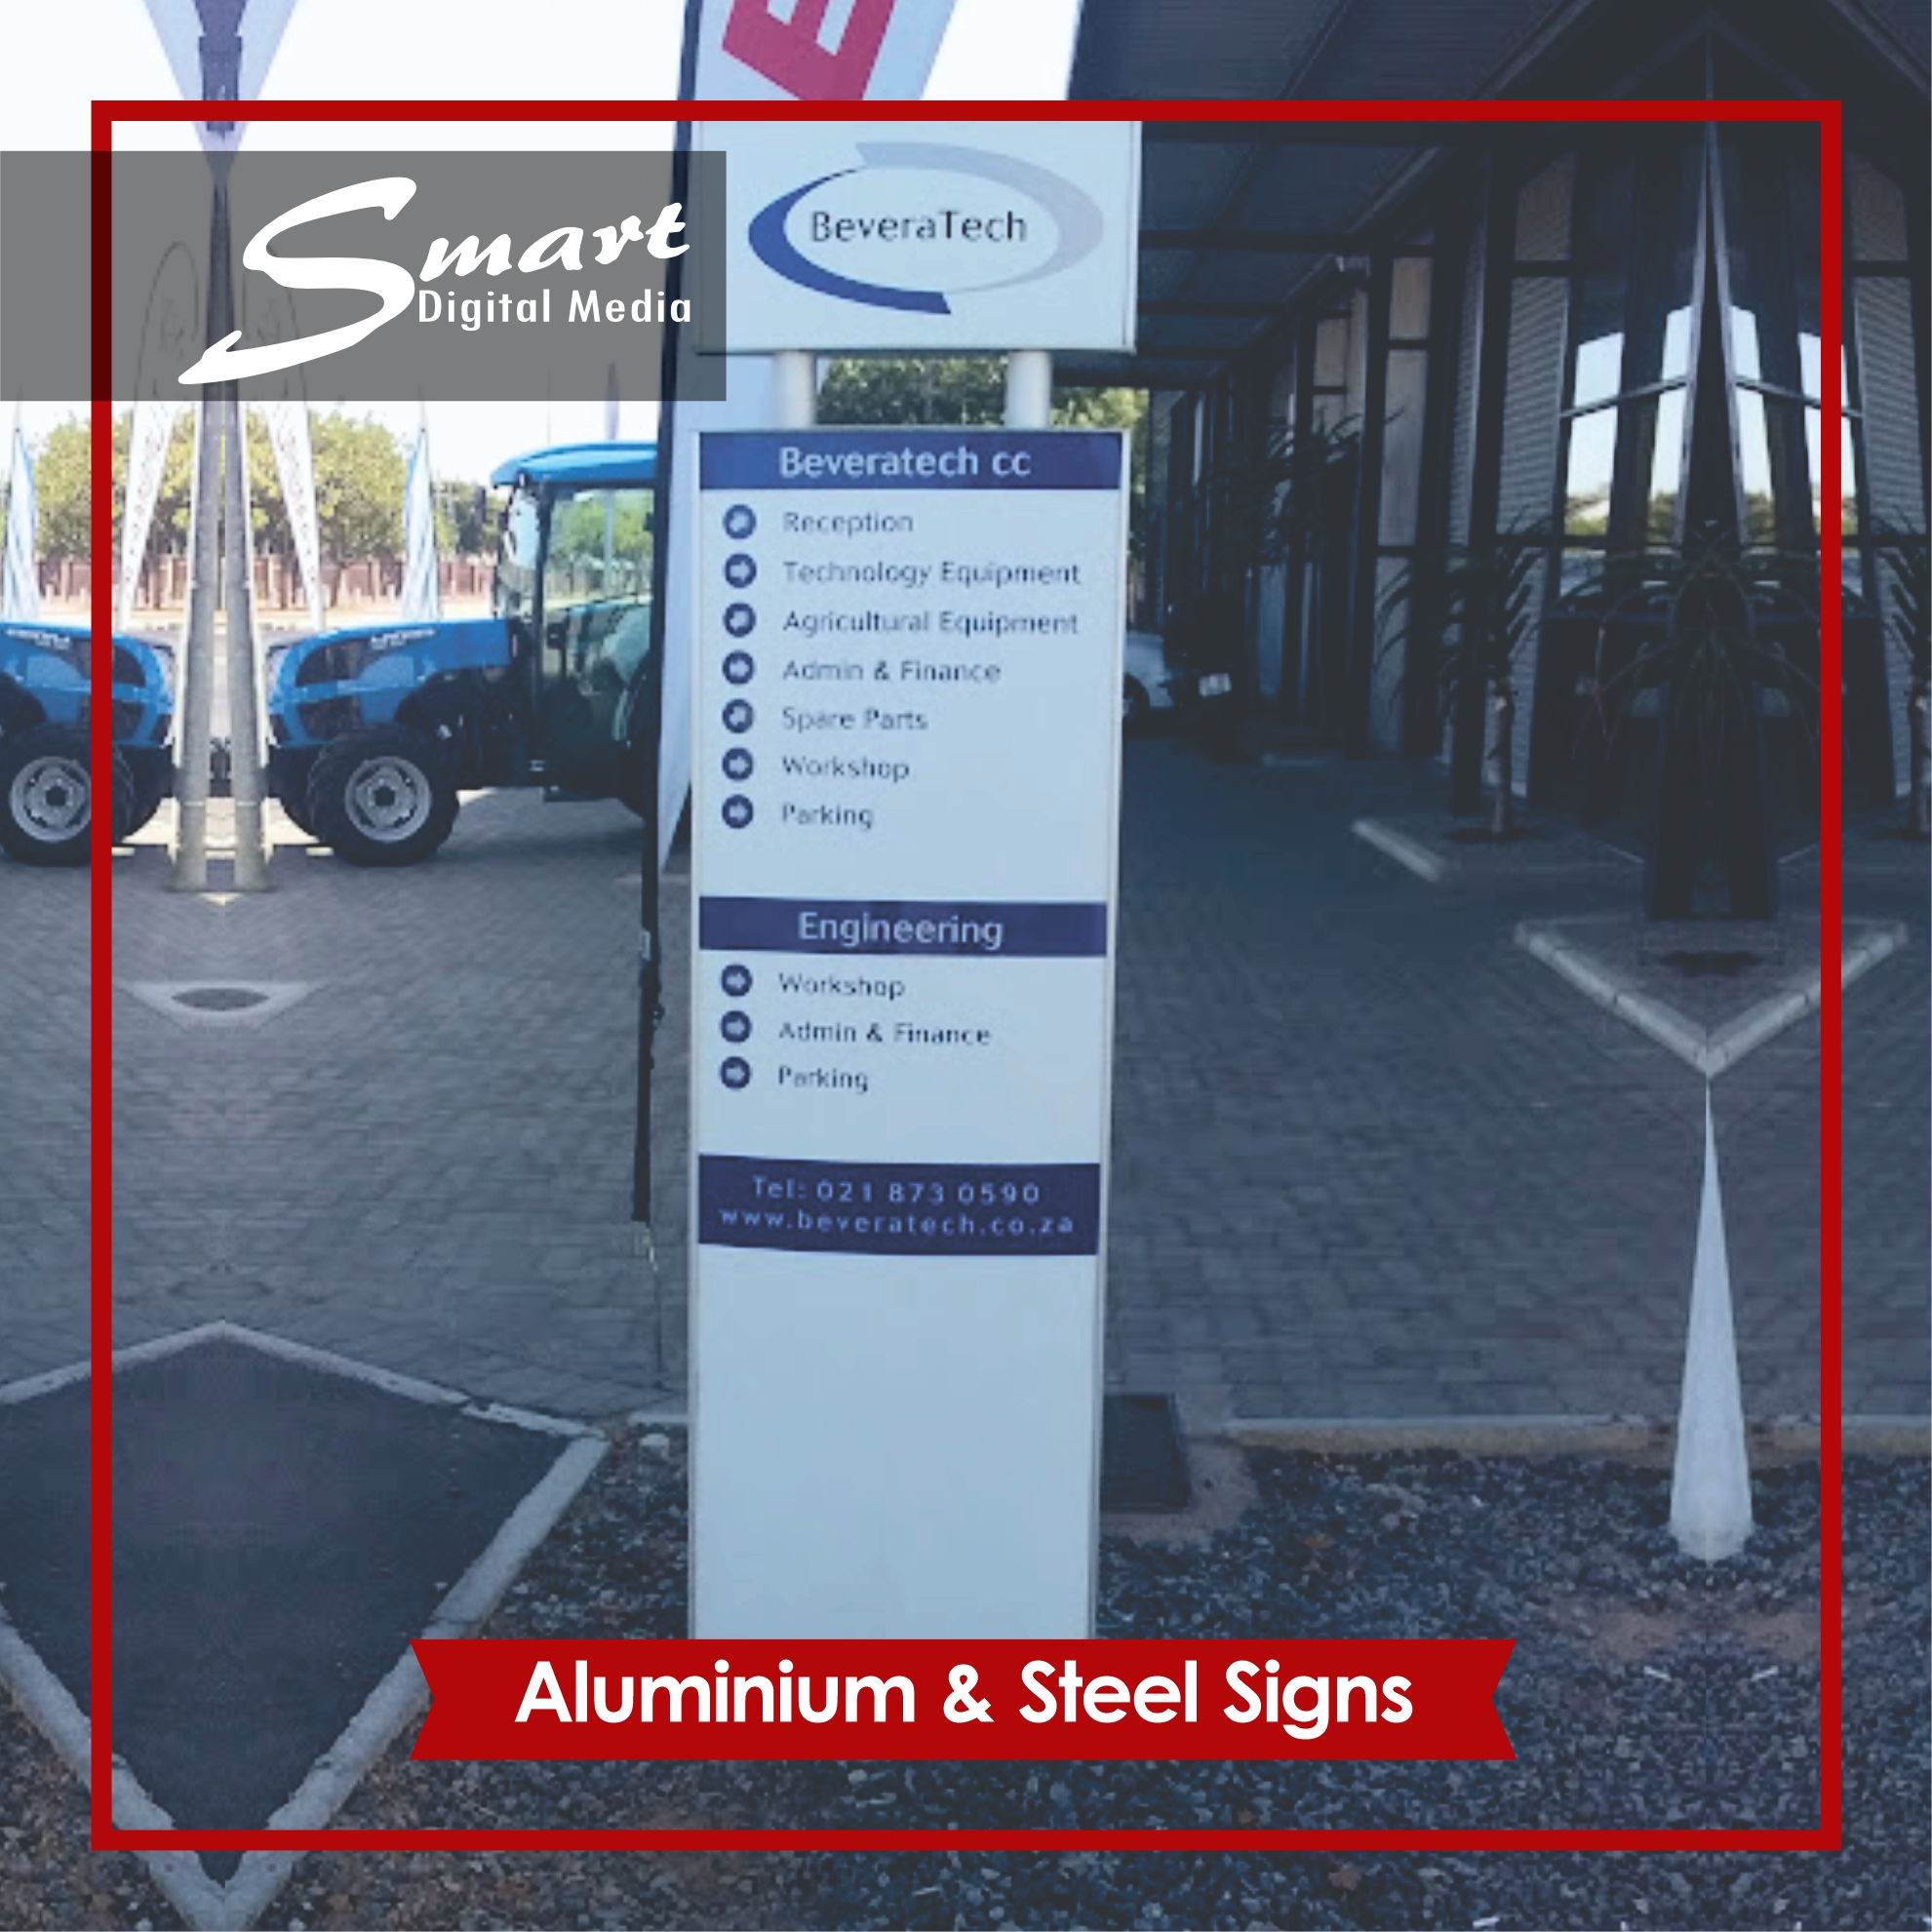 Aluminium & Steel Totem signage manufactured and designed by Smart Digital Media